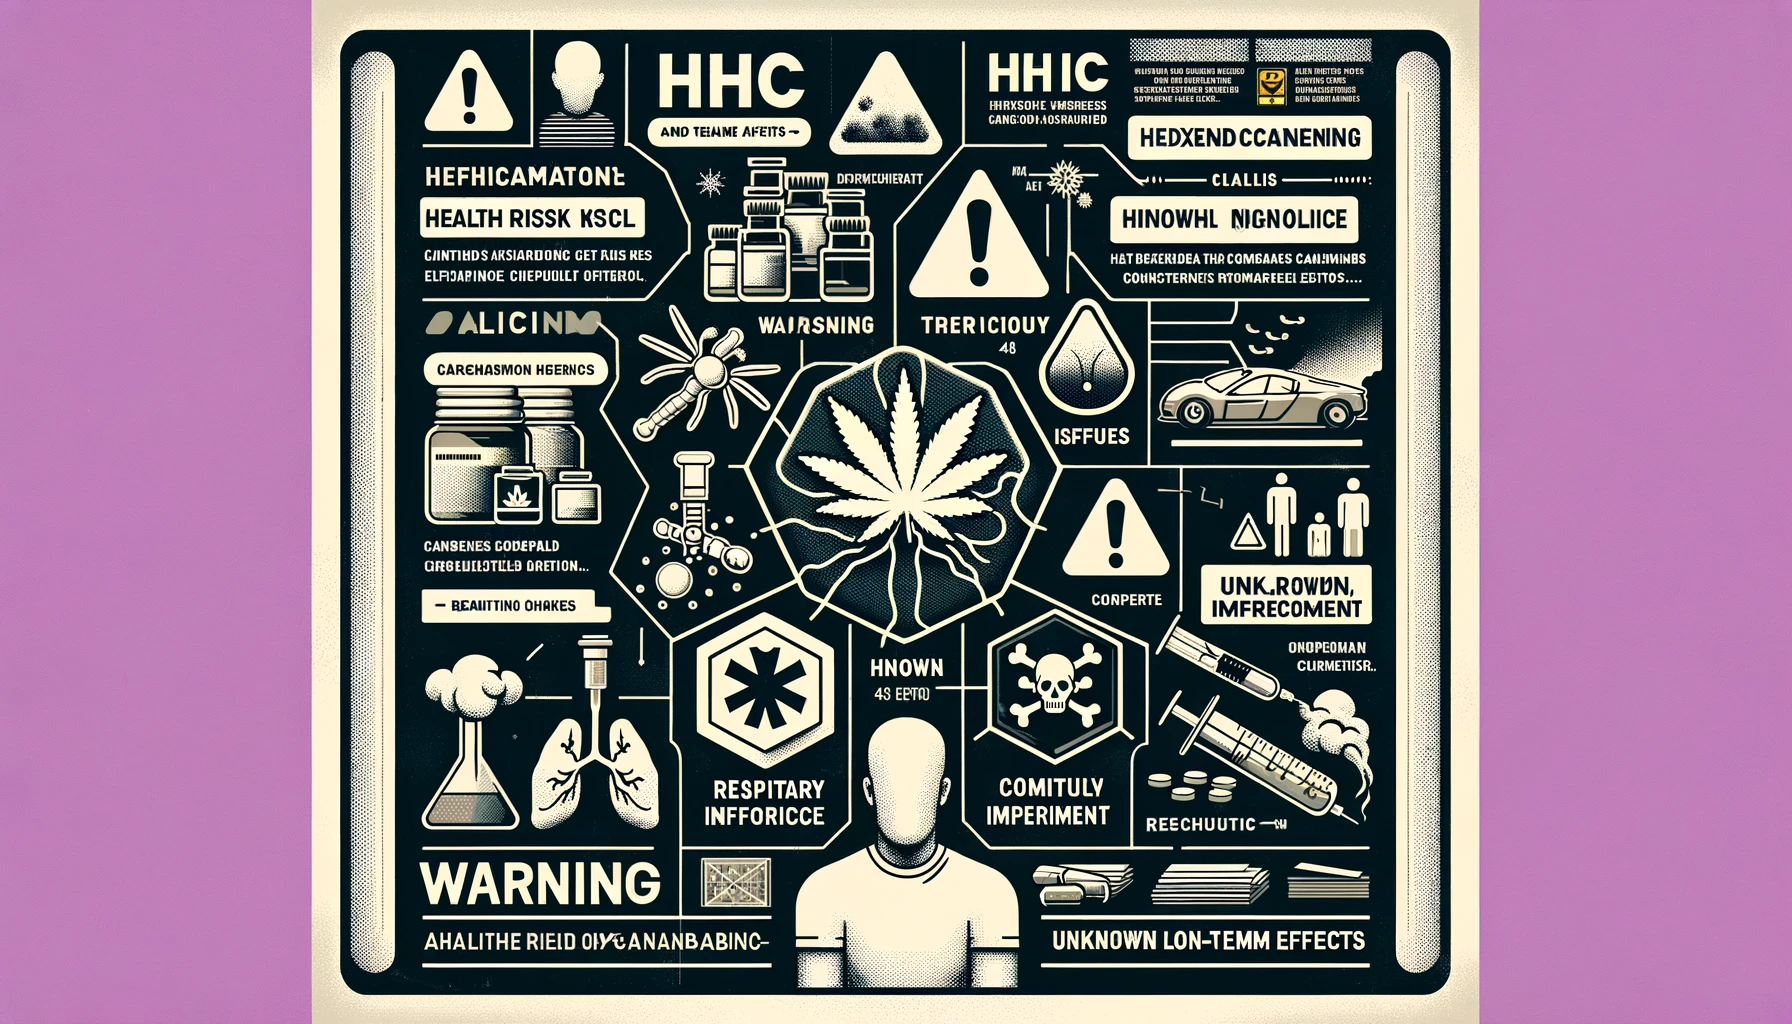 posibles peligros del hhc